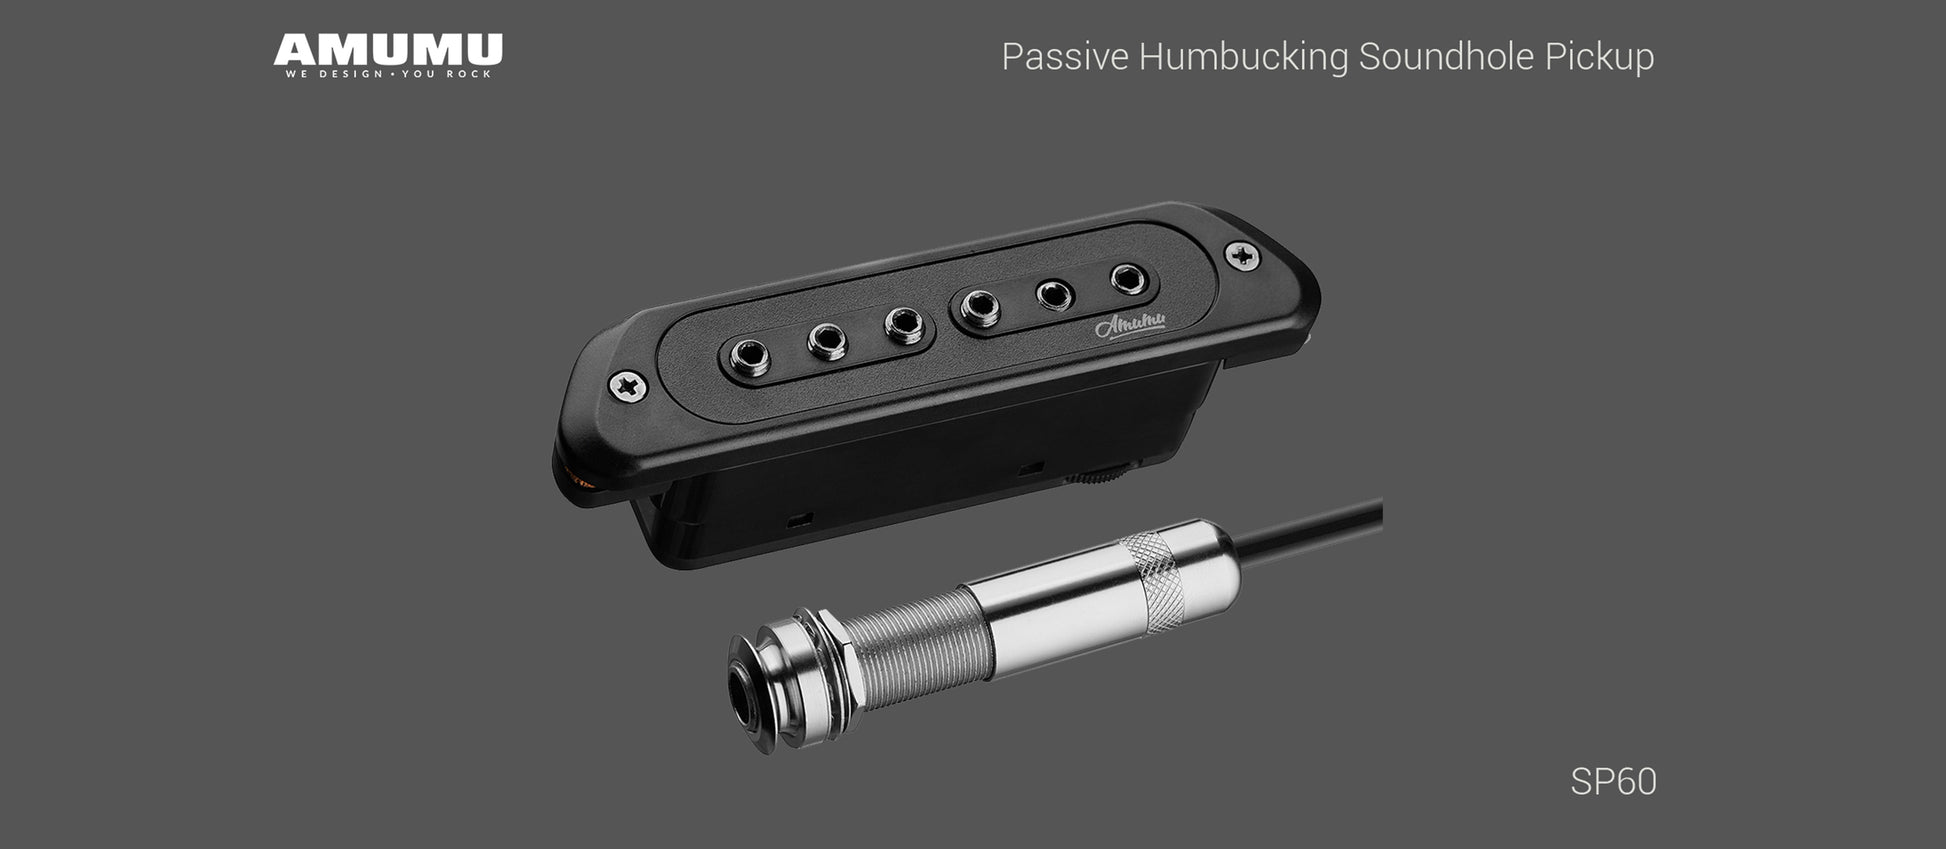 Amumu Passive Humbucking Soundhole Pickup for Acoustic Guitar - SP60